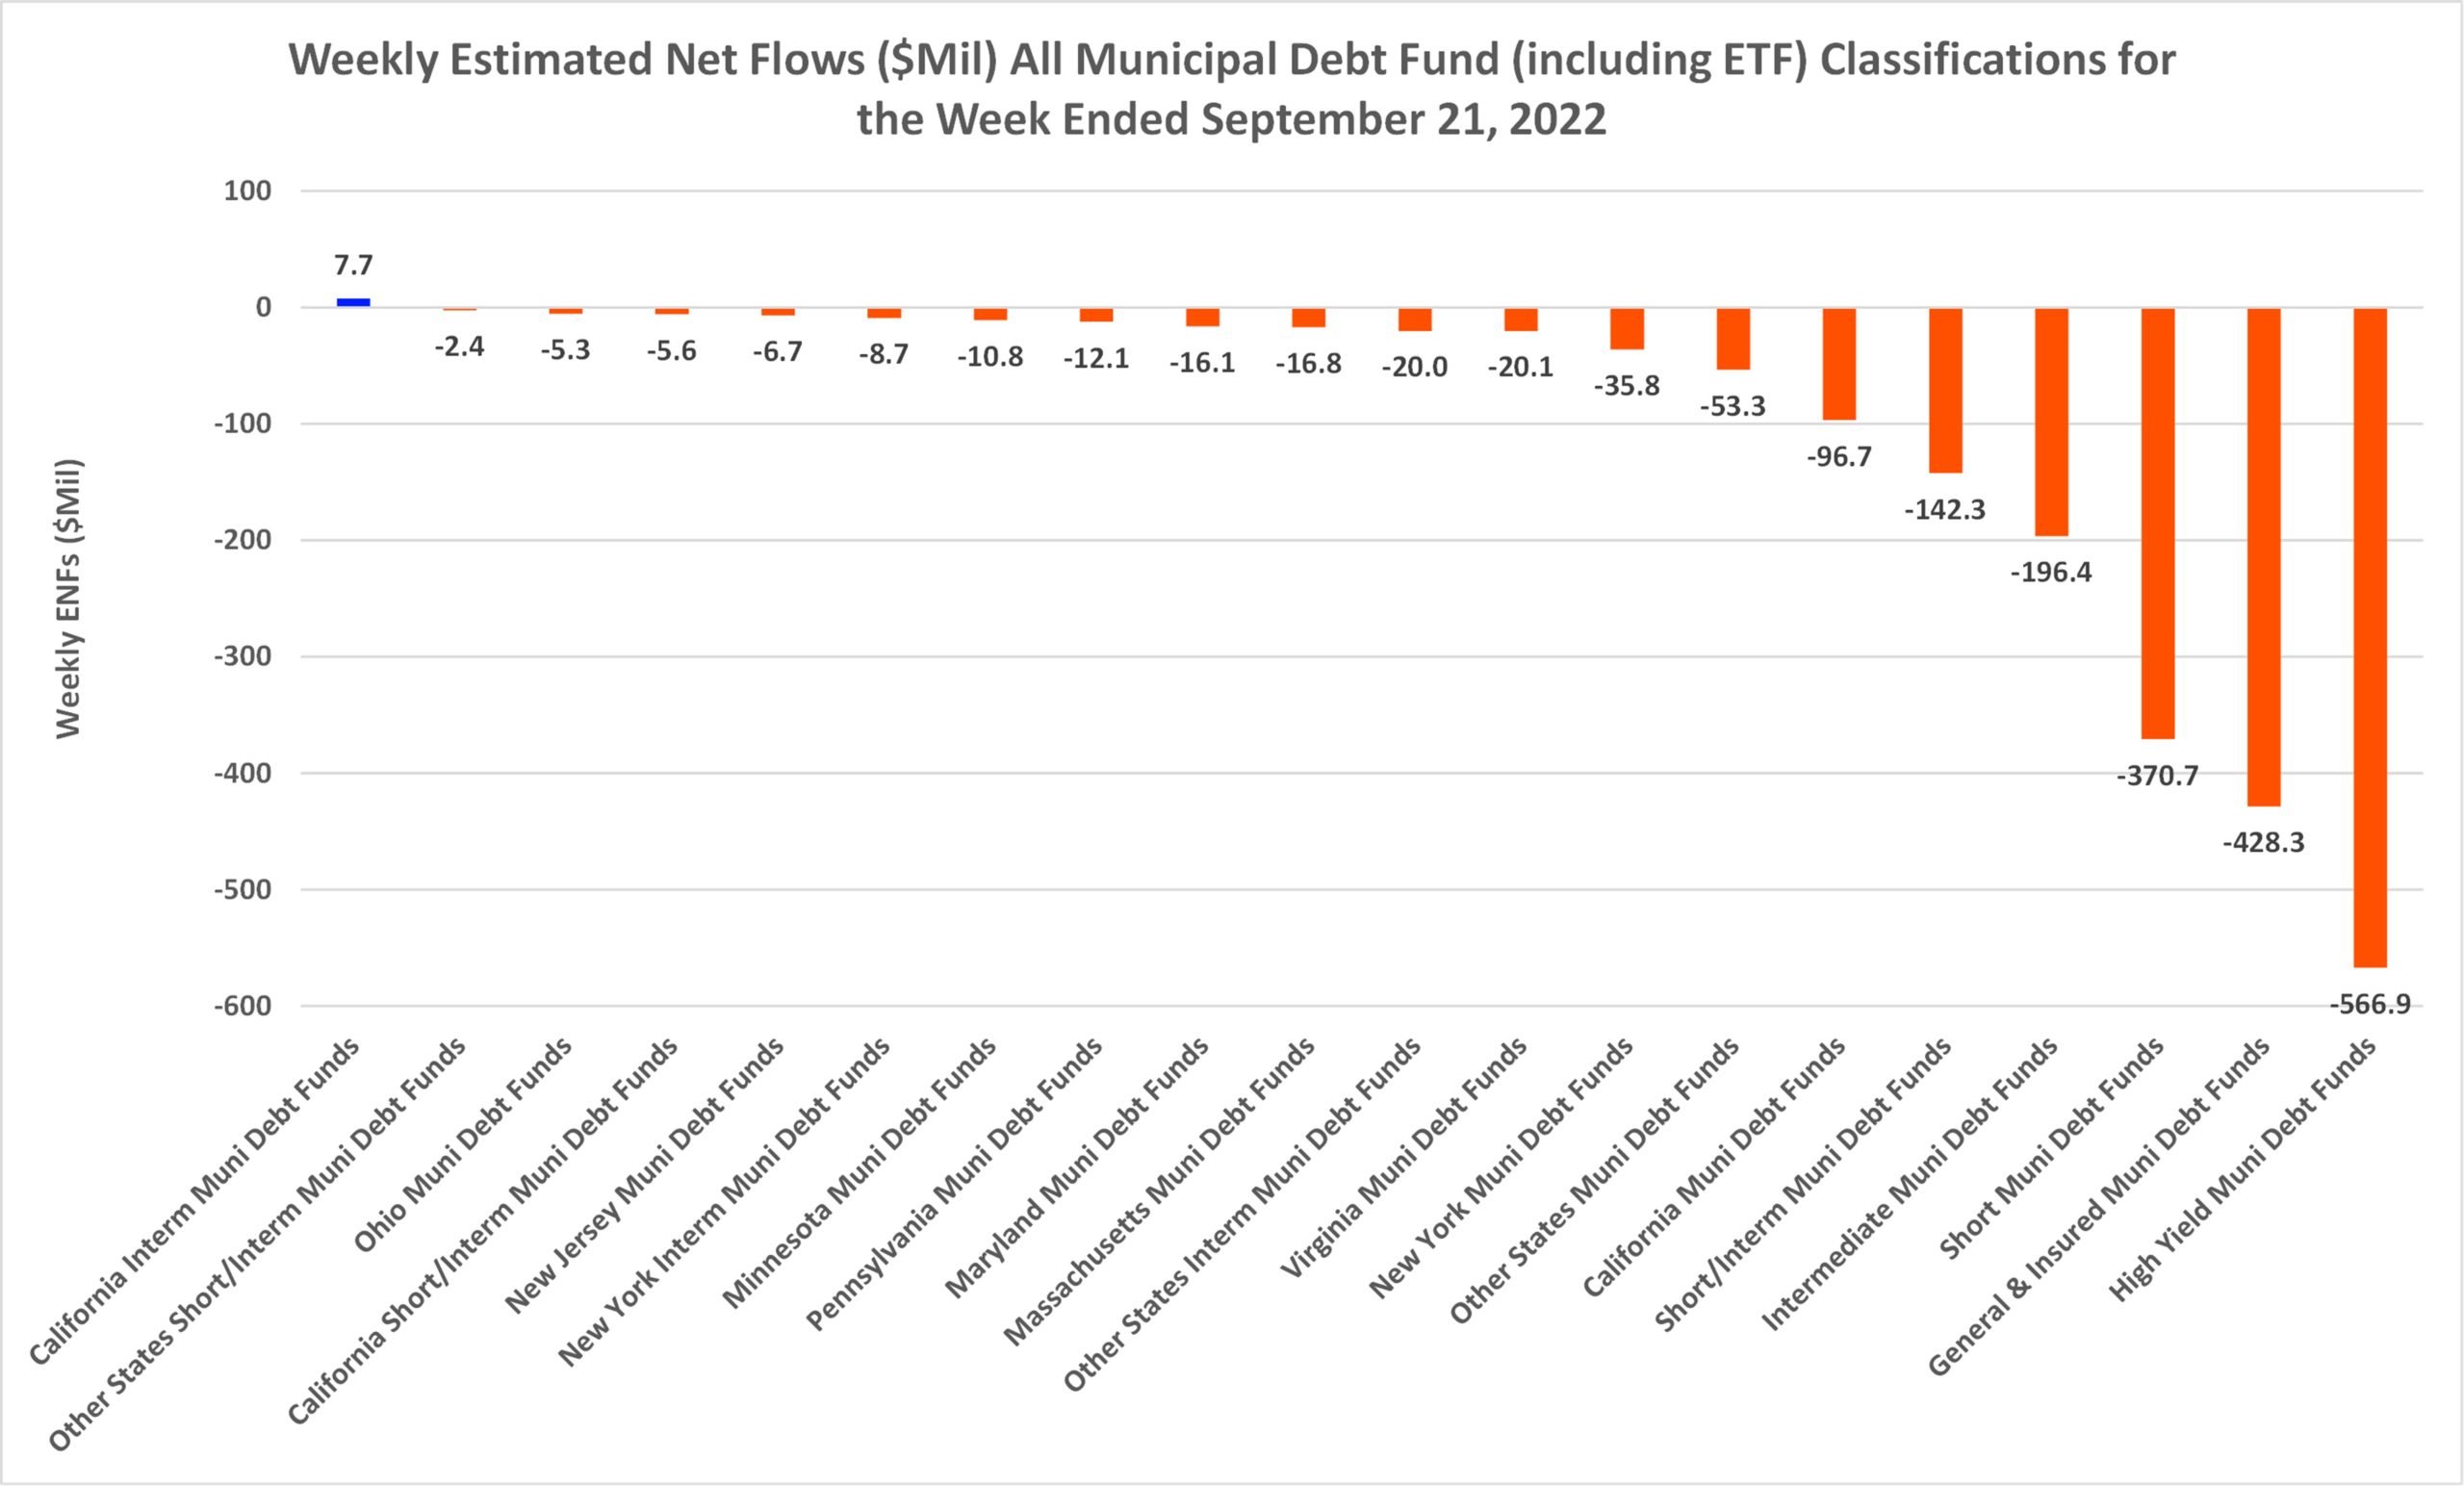 Weekly ENFs Muni FI Fund Classifications